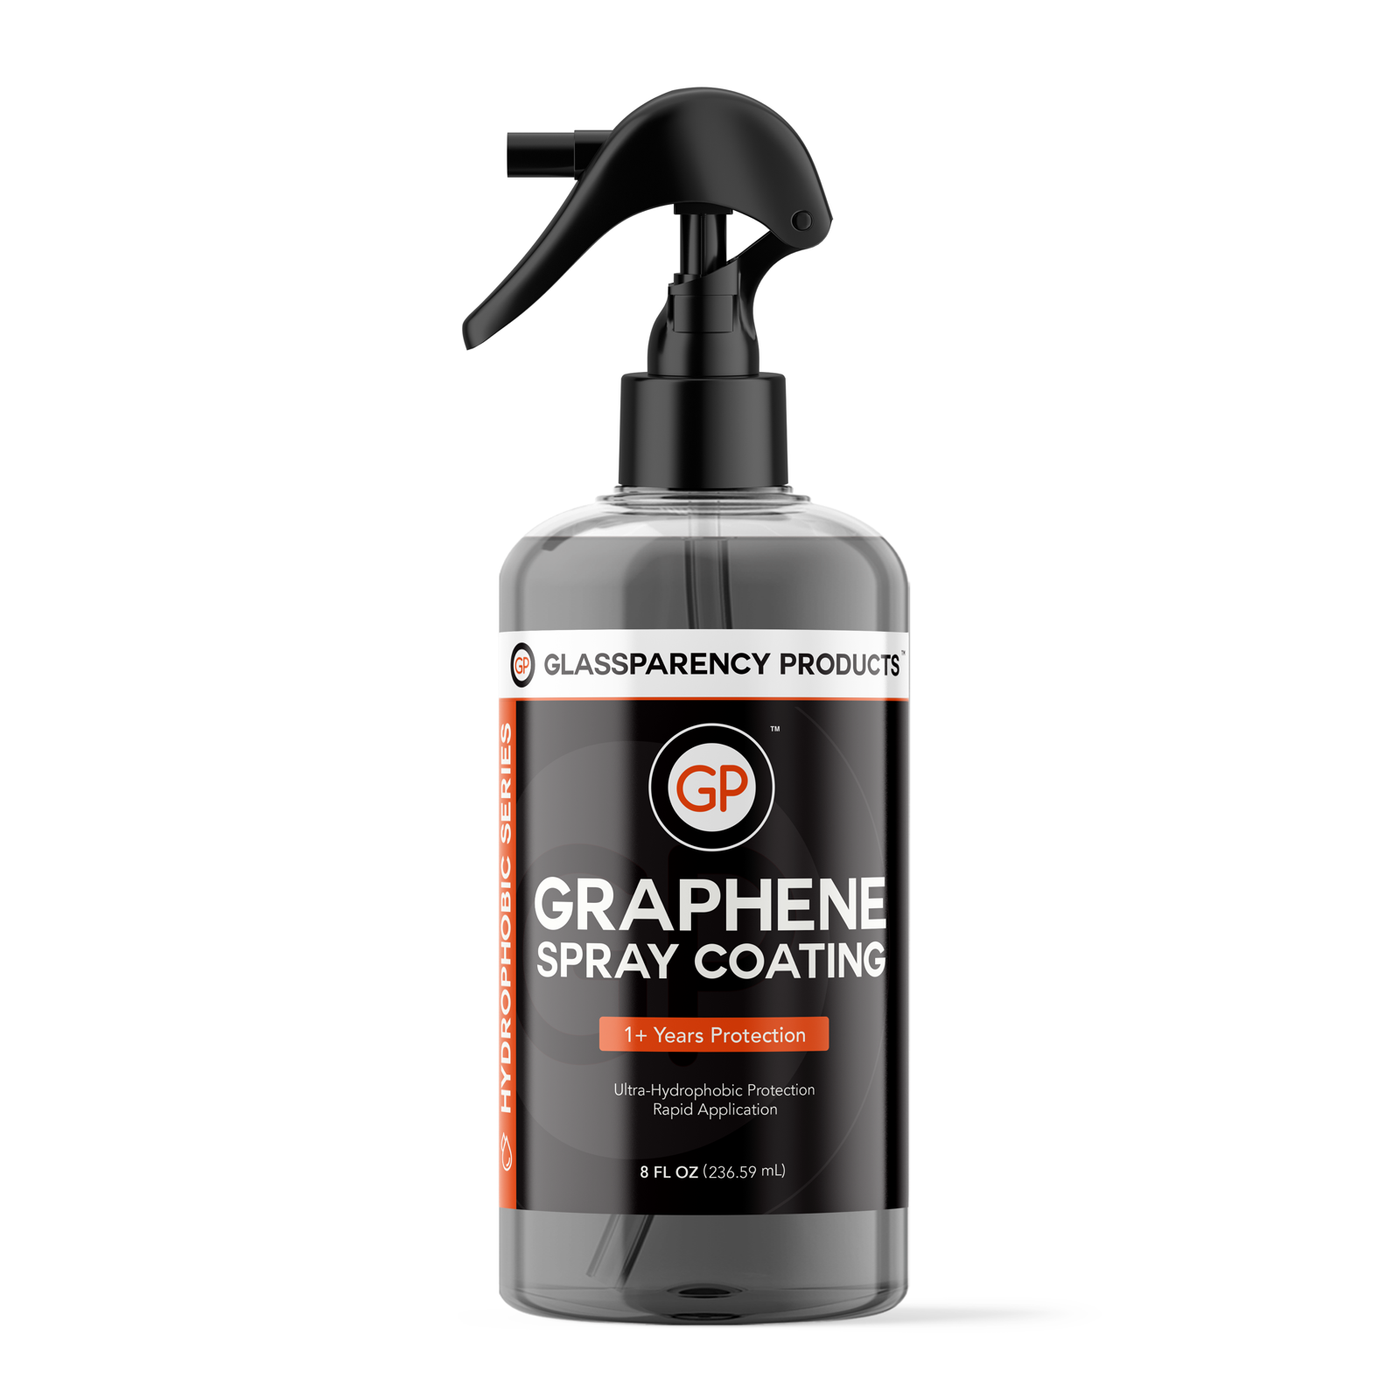  Adam's Graphene Boost - Graphene Ceramic Coating Spray